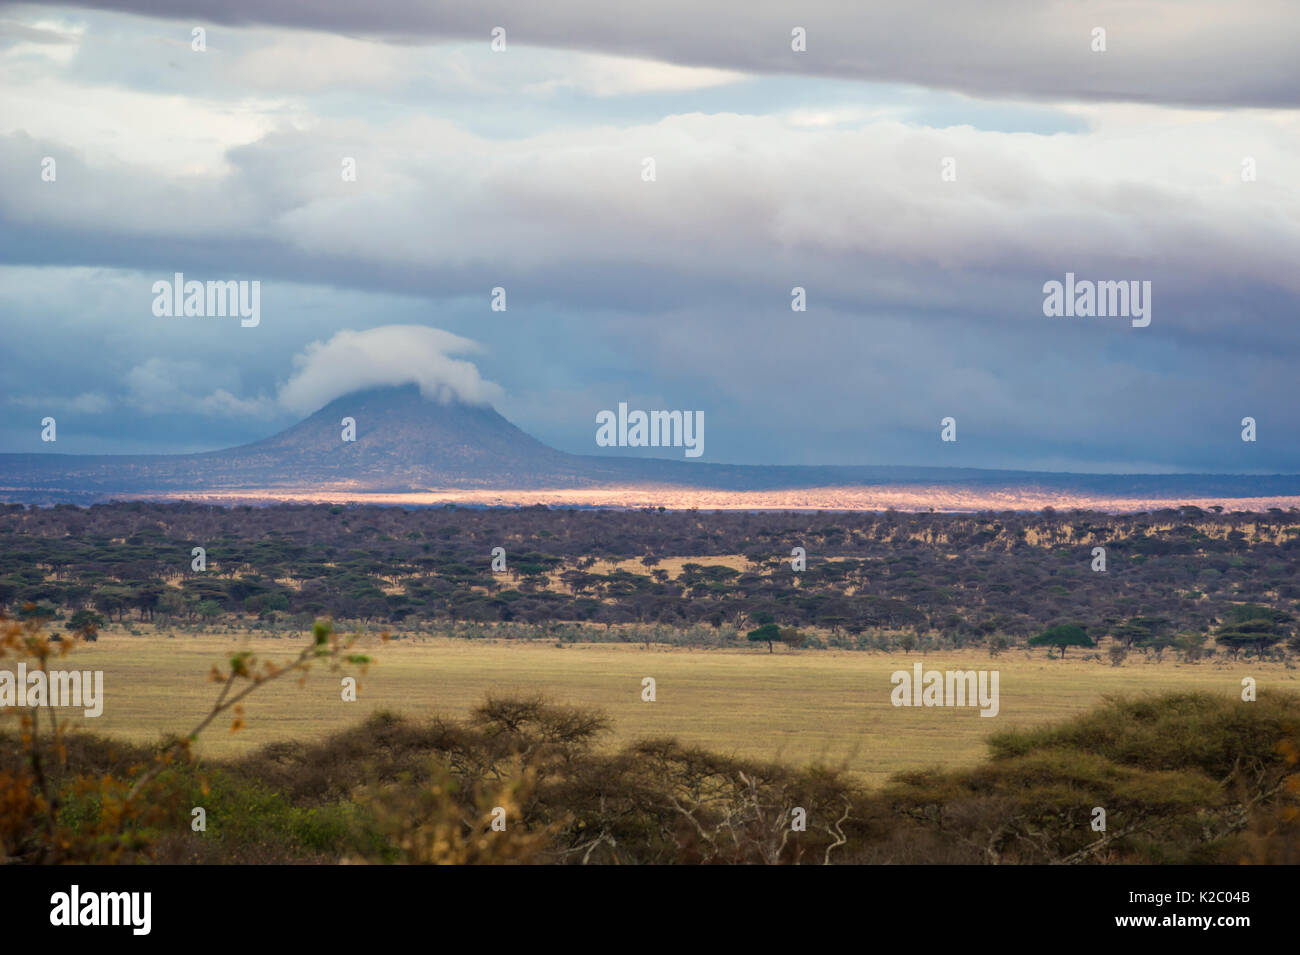 Landscape and volcanic mountain, Tarangire National Park at sunset, Northern Tanzania. September 2014. Stock Photo